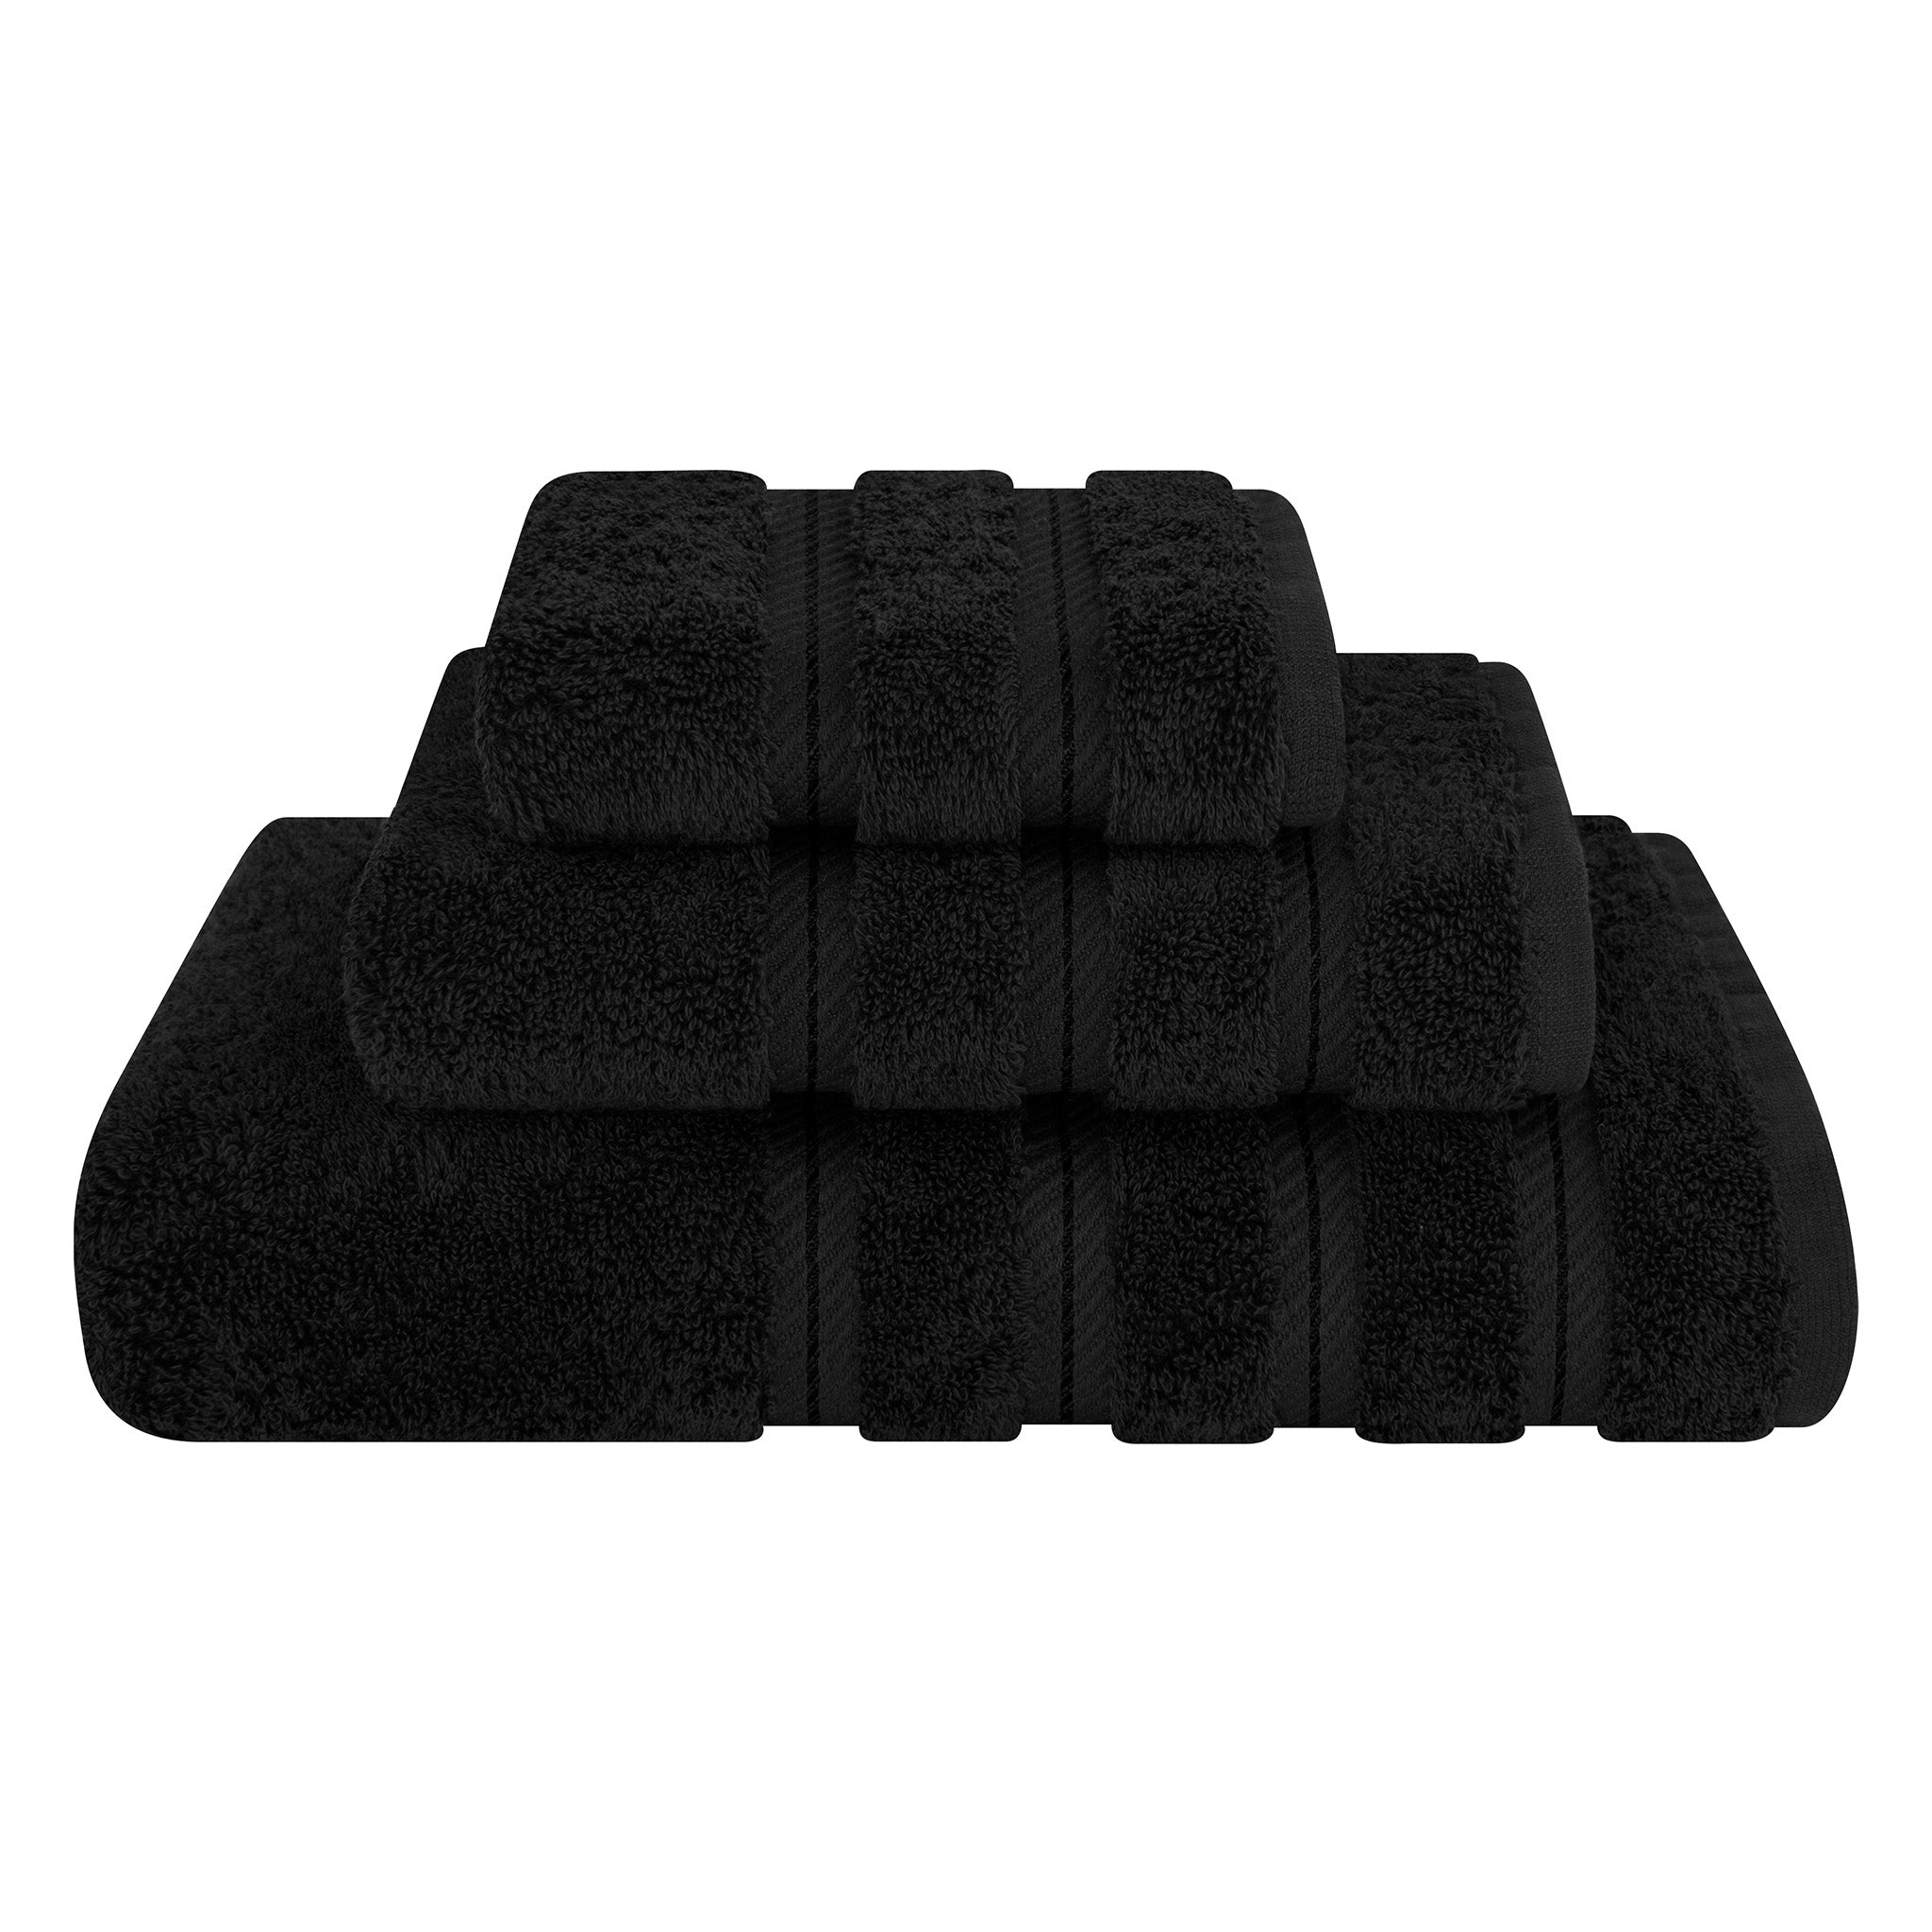 American Soft Linen 3 Piece Luxury Hotel Towel Set 20 set case pack black-1